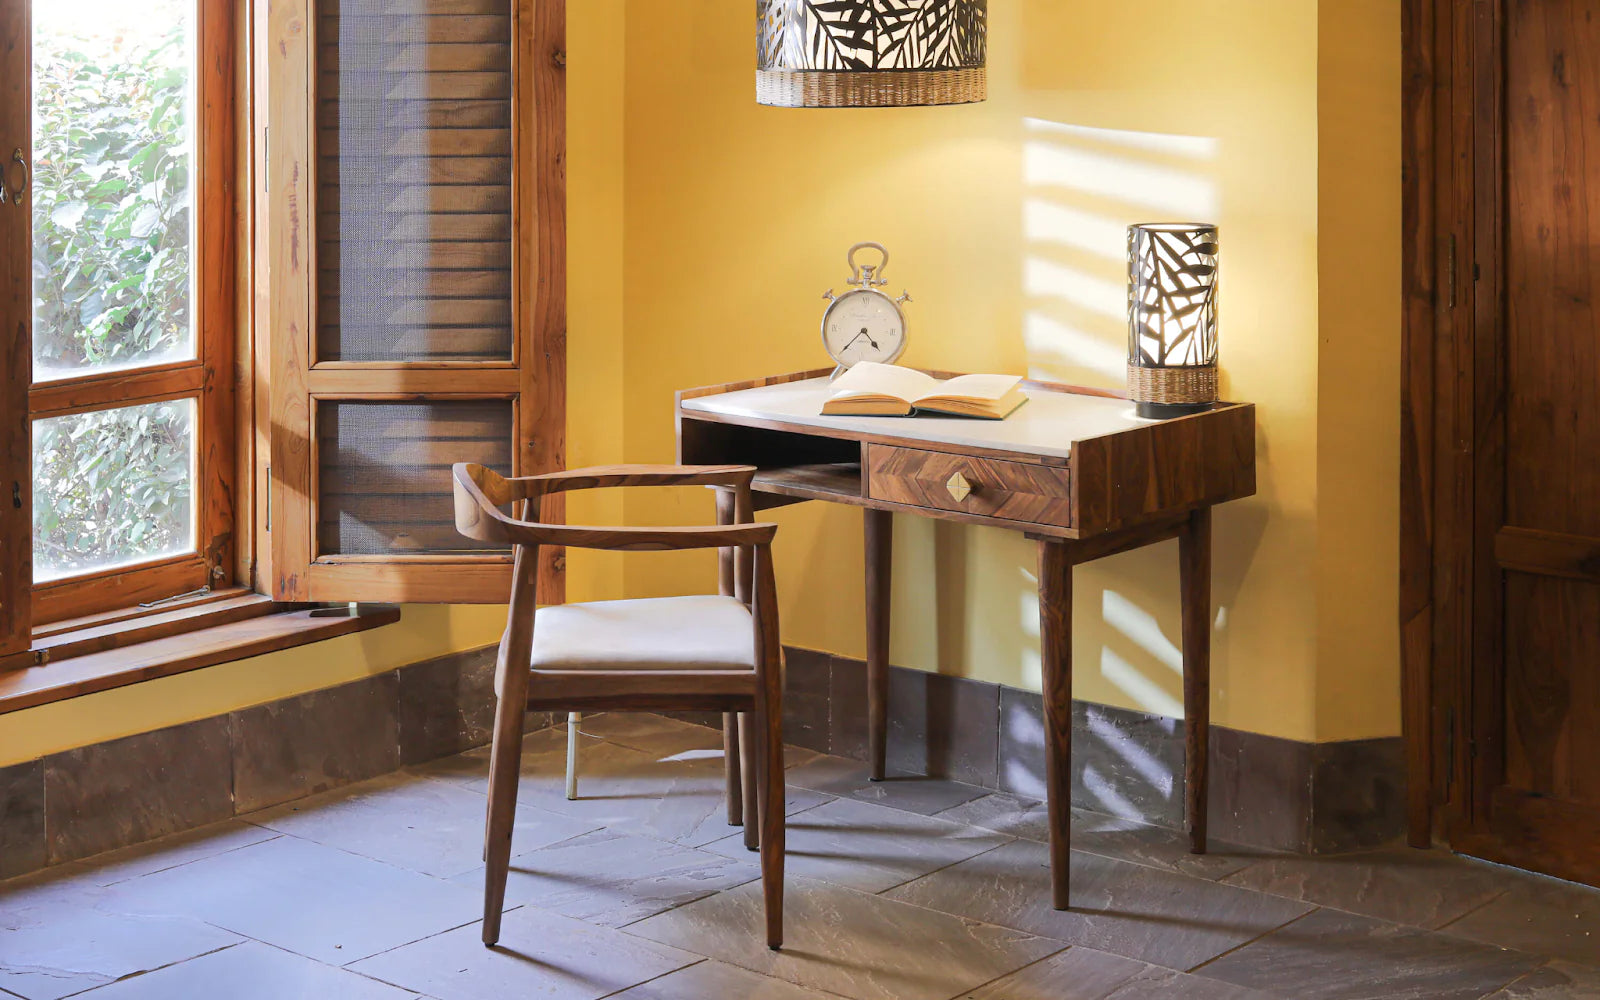 Sheesham wood Dado Study Table with chair  near the window